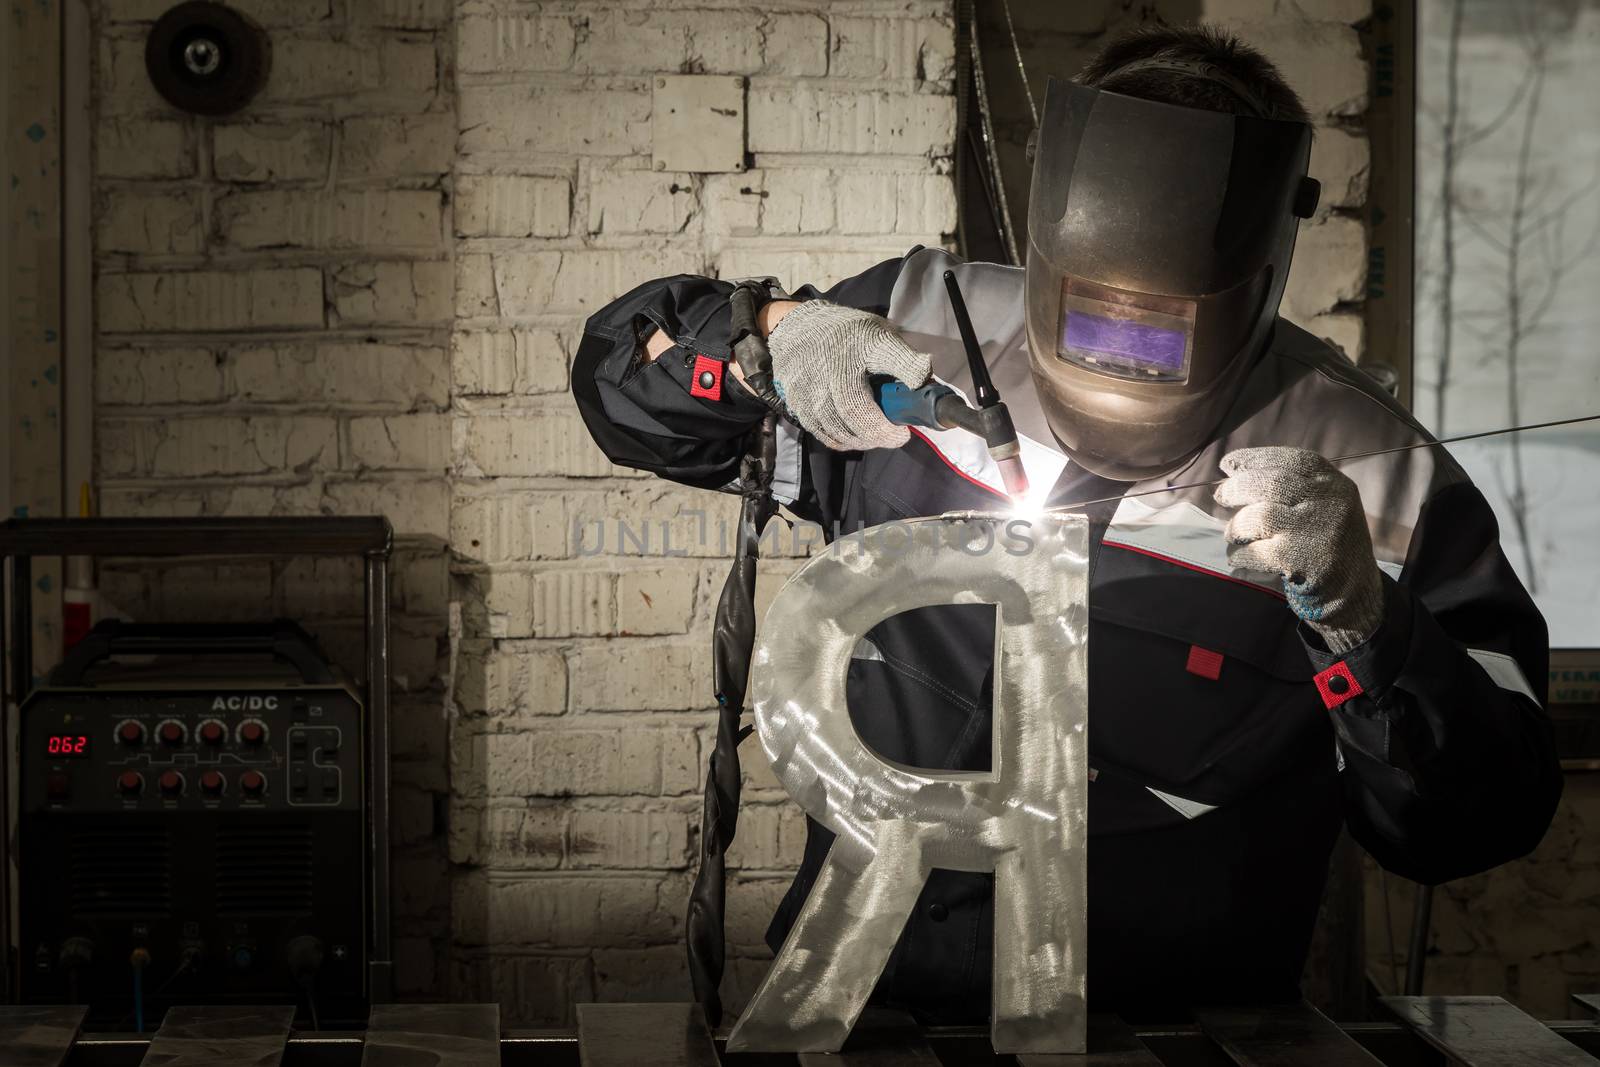 Welder welding a metal part in an industrial environment, wearing standard protection equipment. by sveter